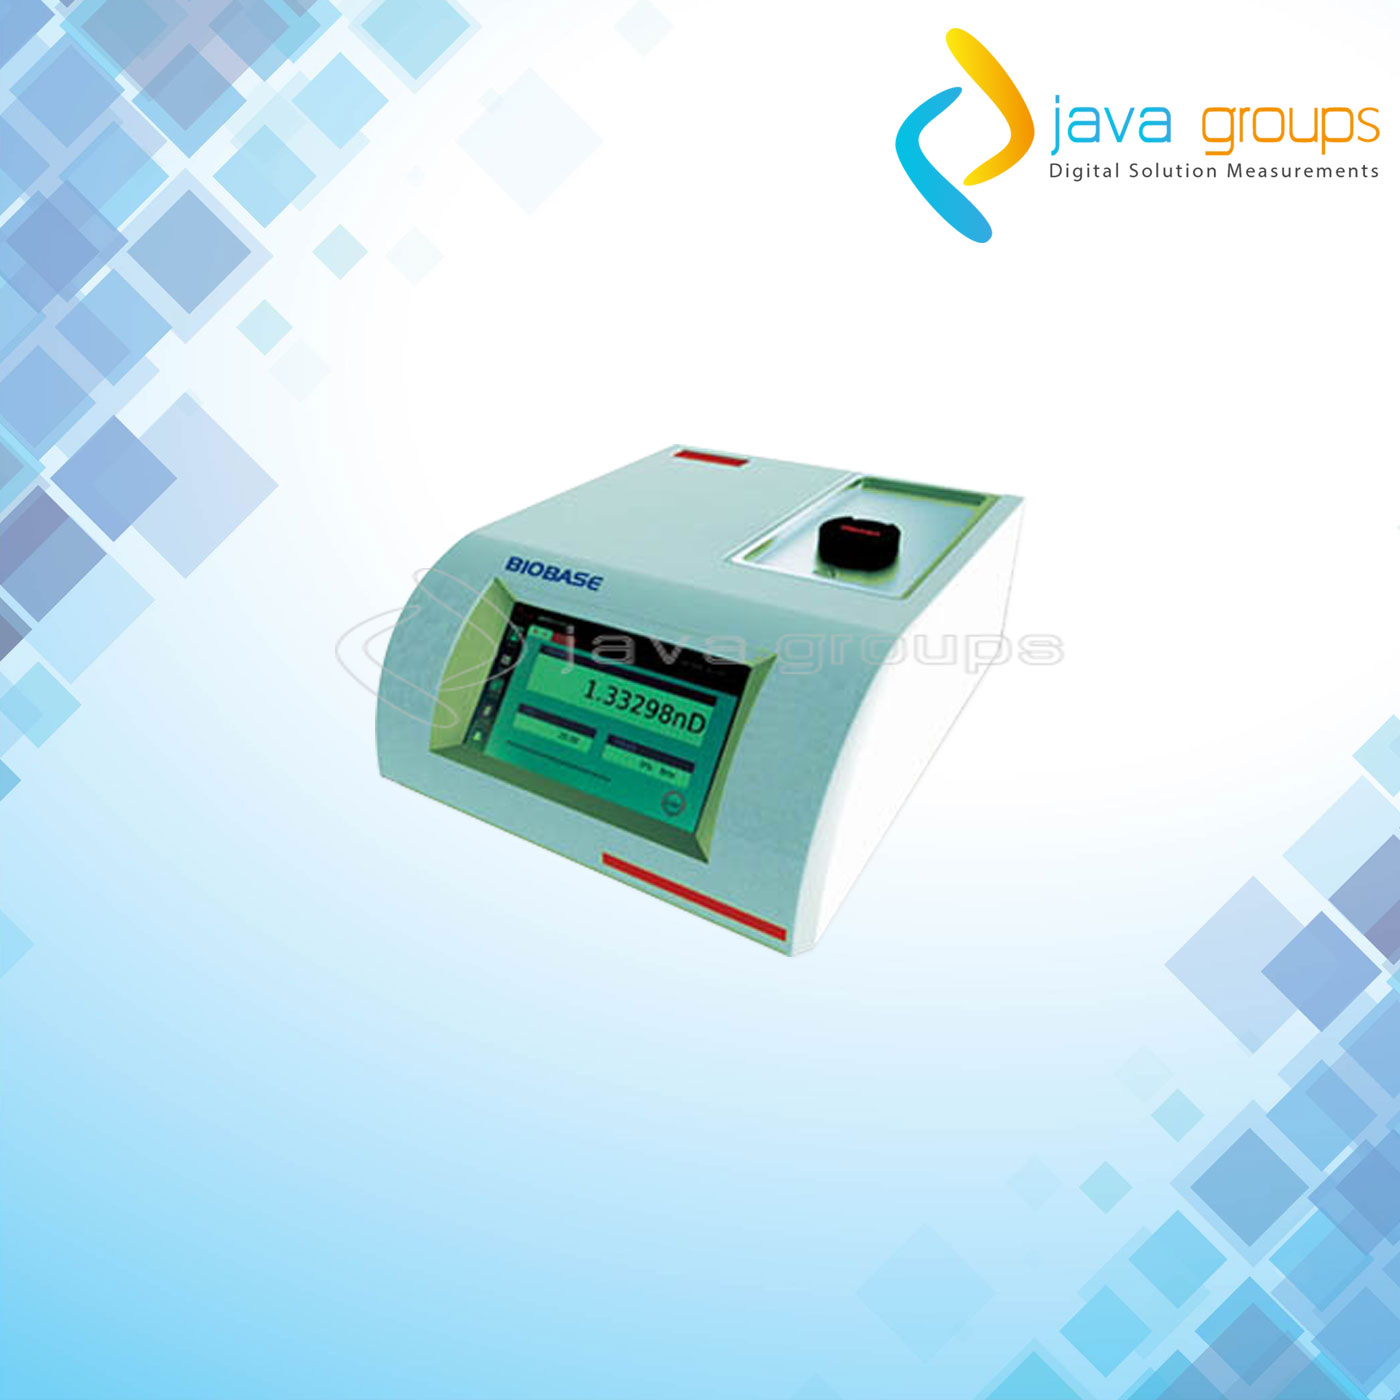 Alat Refraktometer Automatic Biobase BK-R670